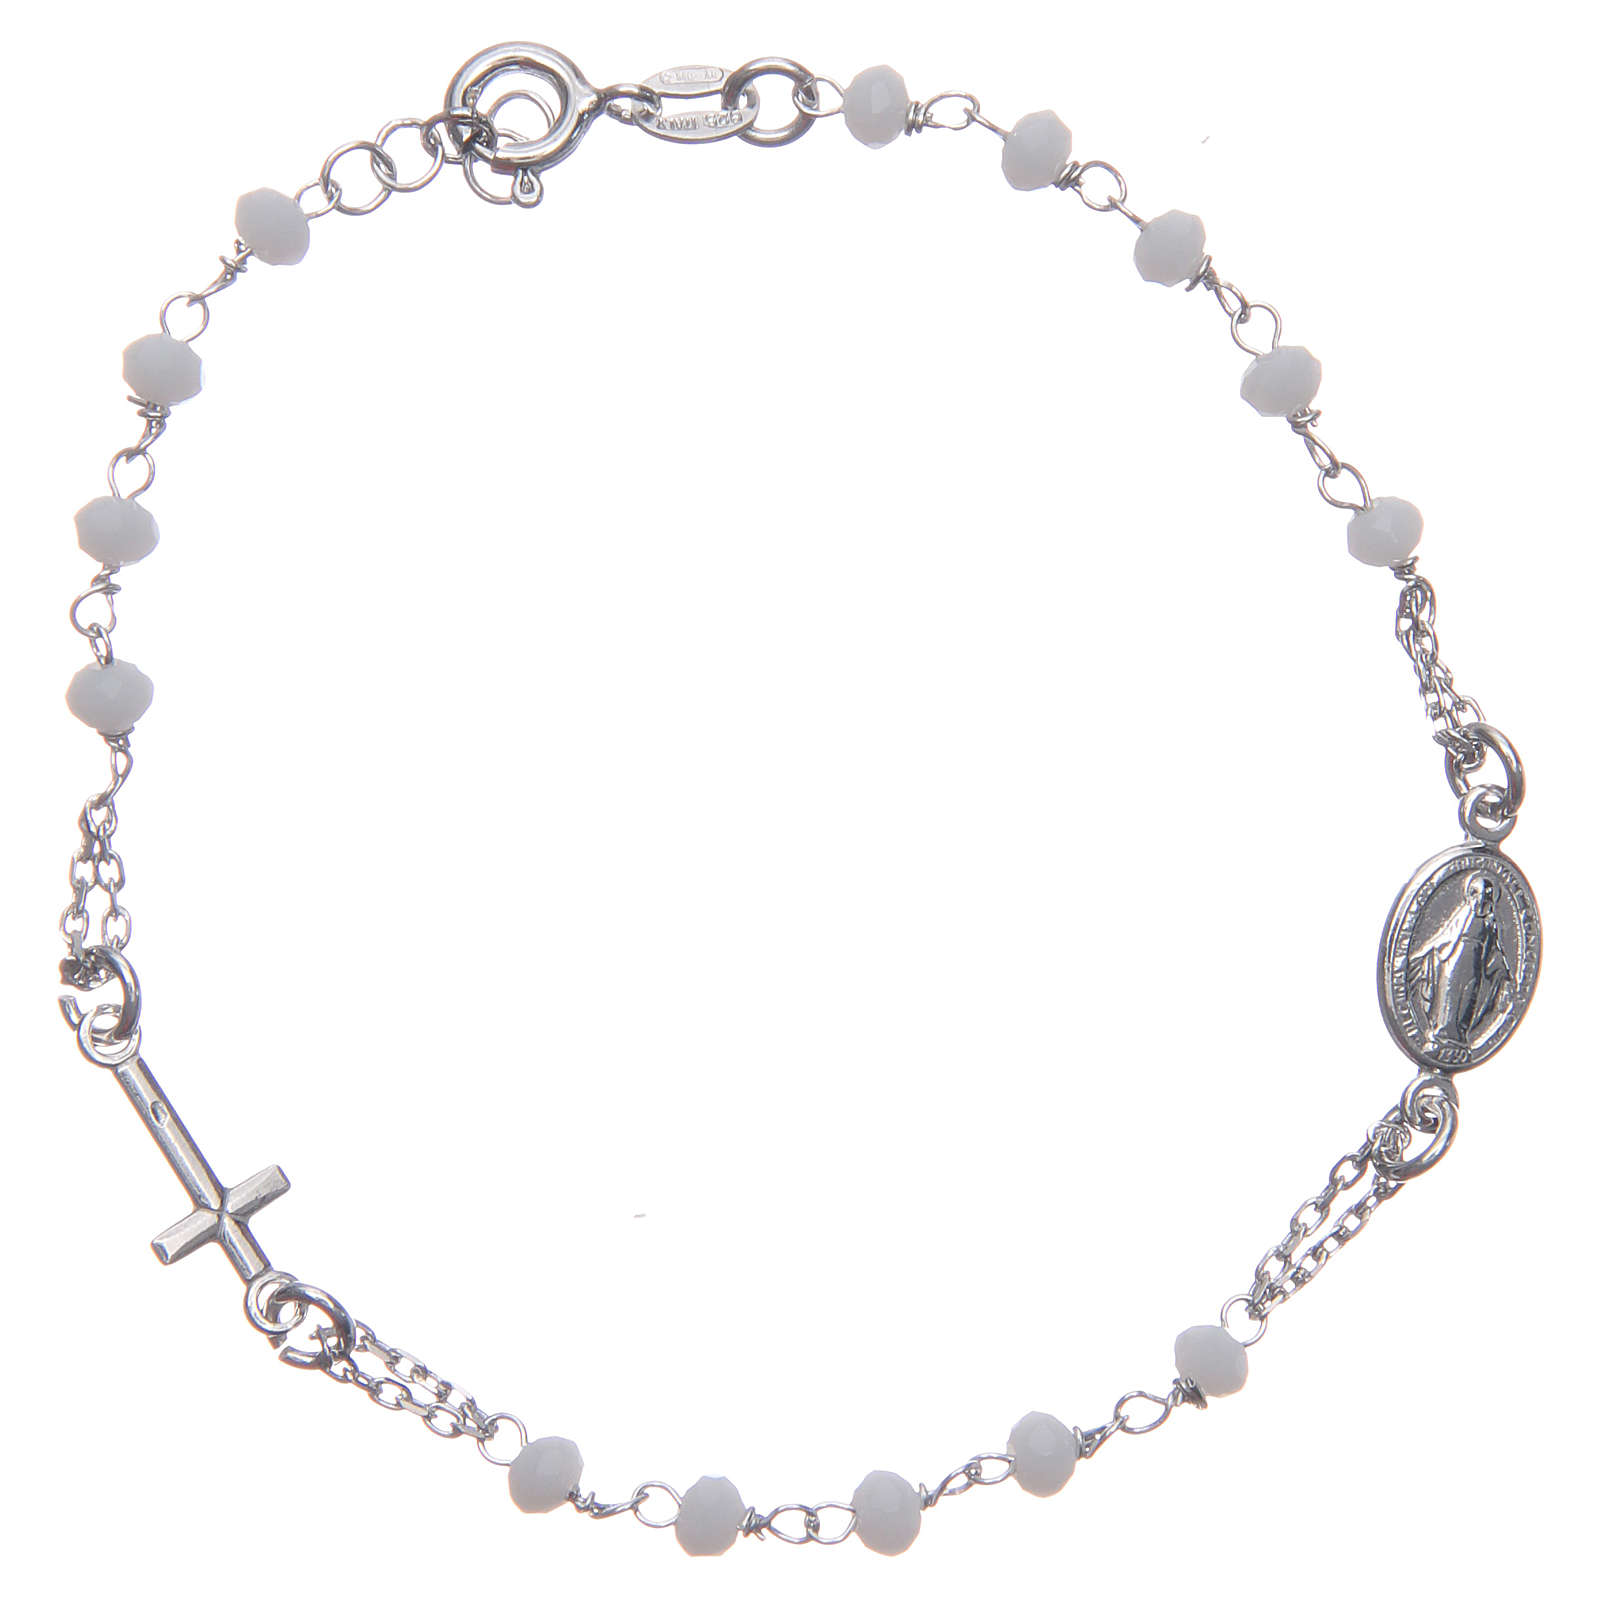 Rosary bracelet white 925 sterling silver | online sales on HOLYART.com